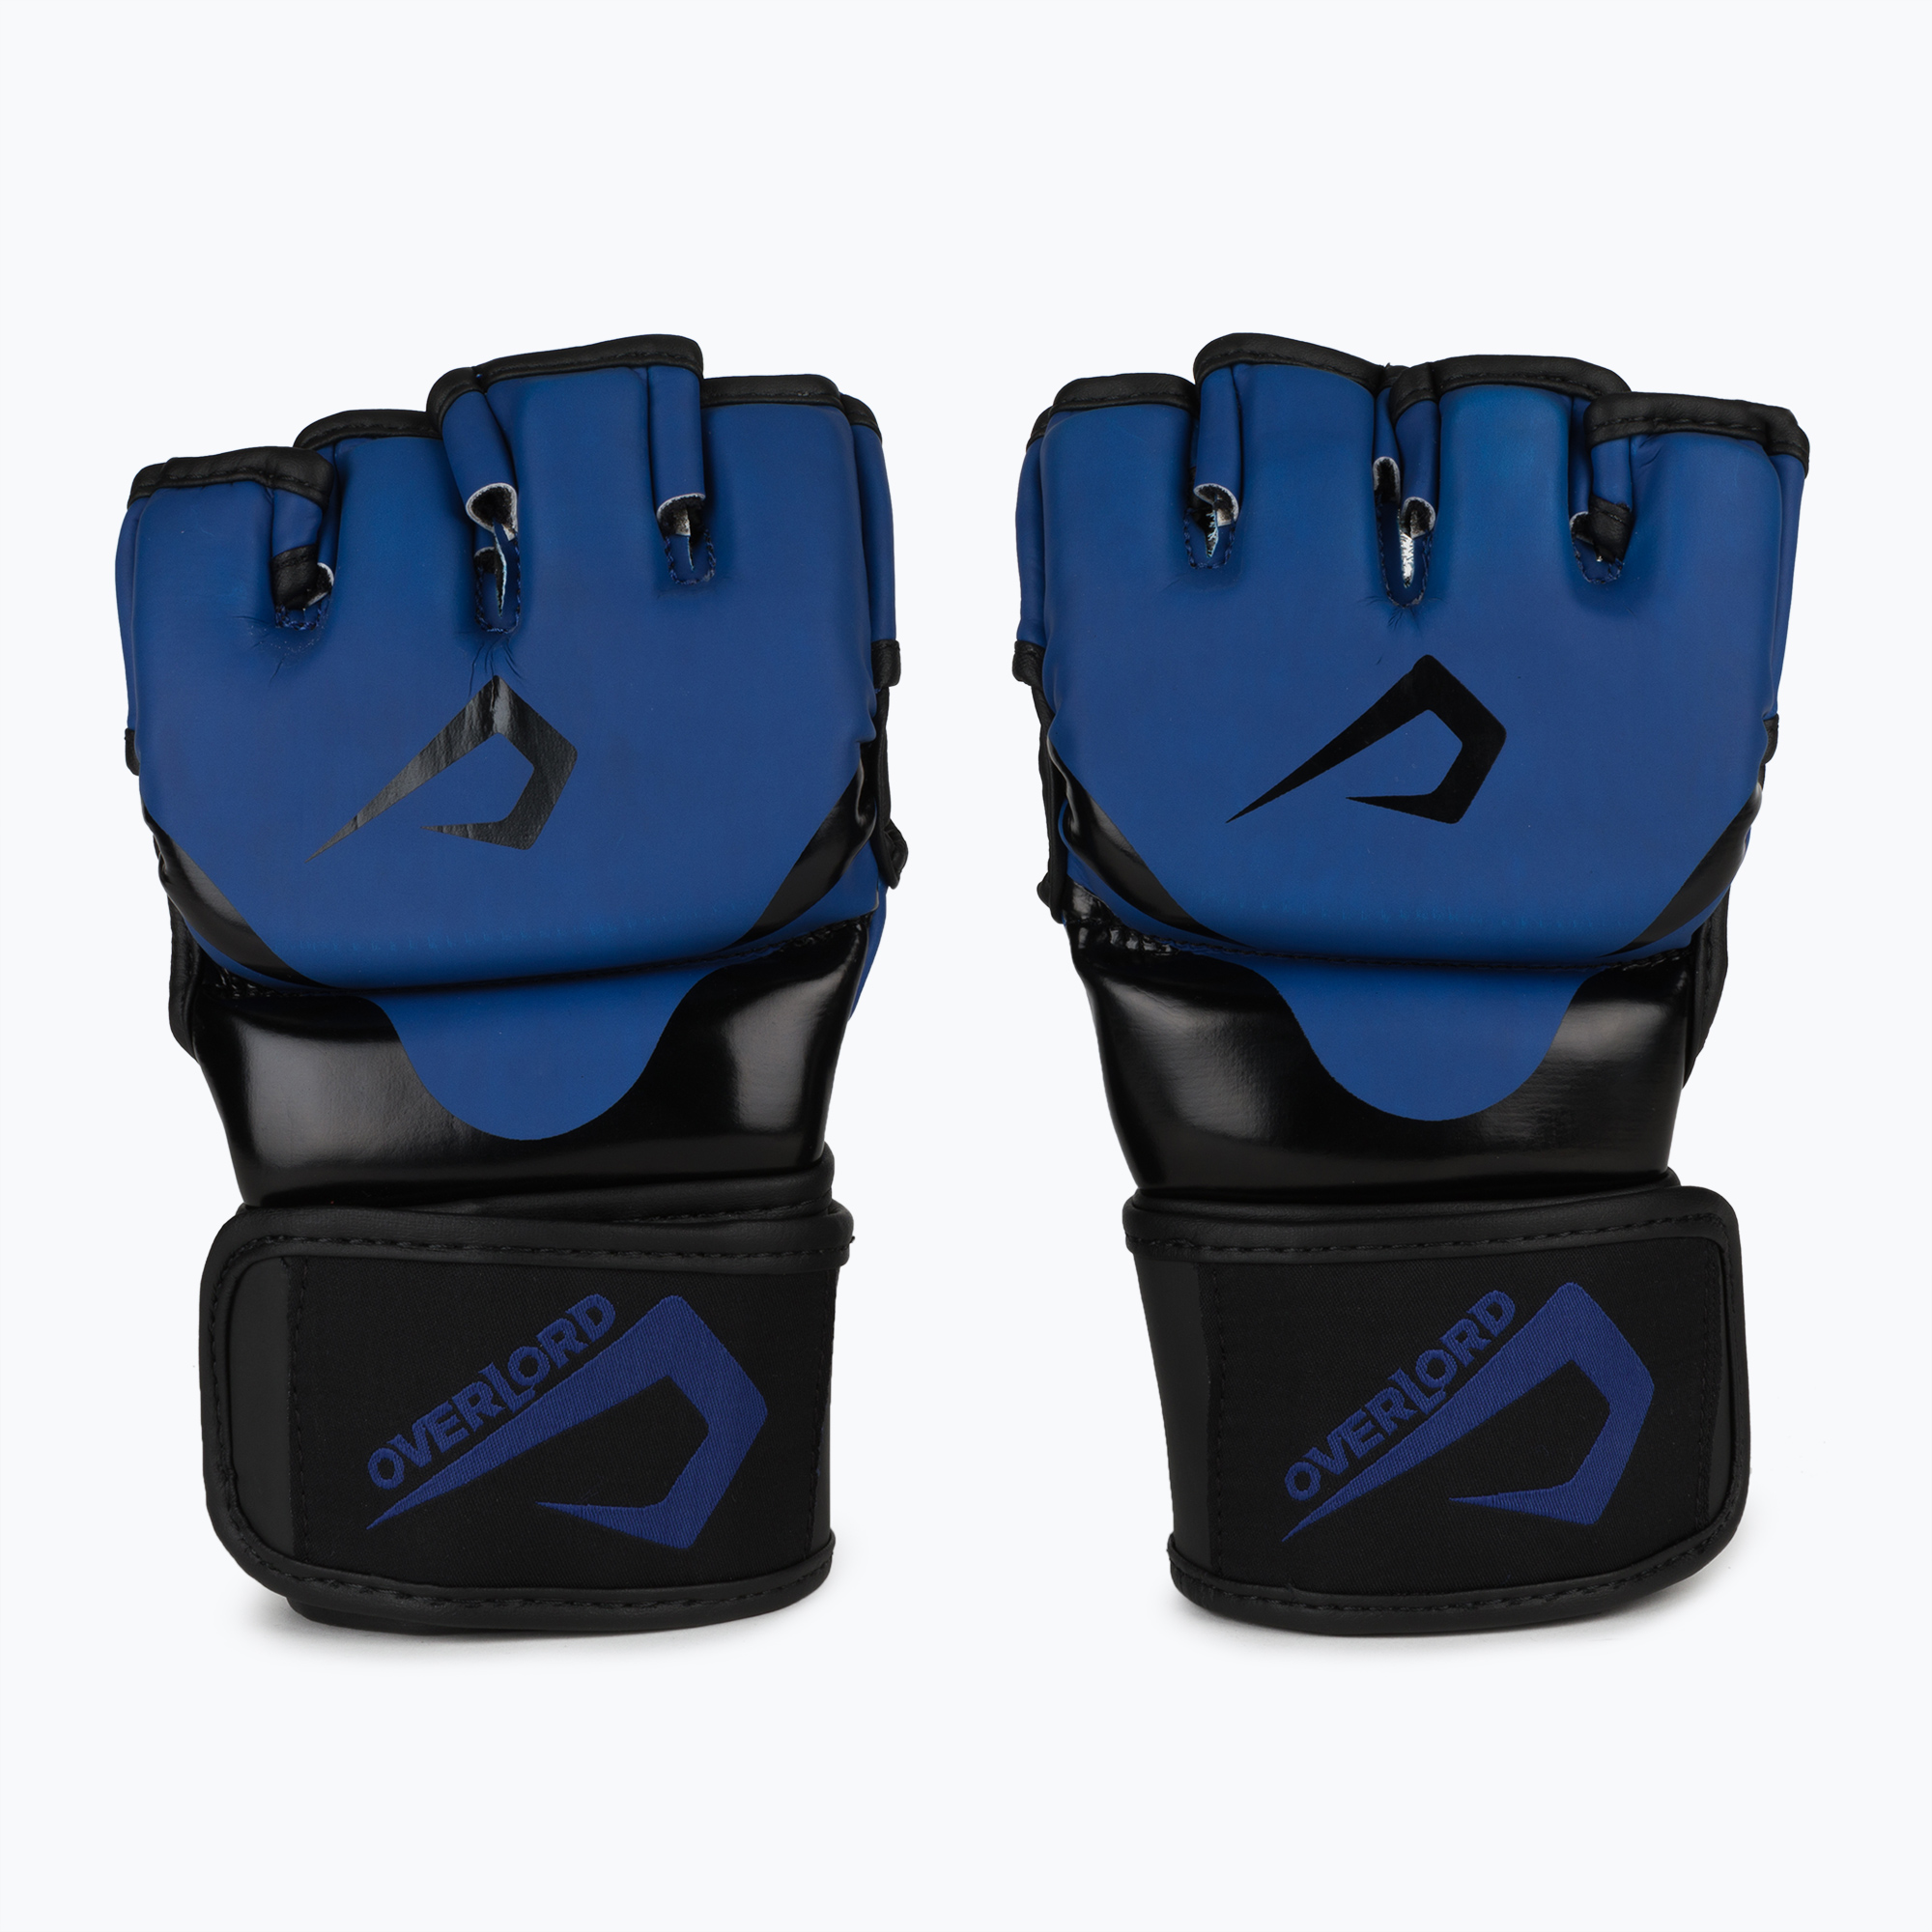 Overlord X-MMA grapplingové rukavice modré 101001-BL/S